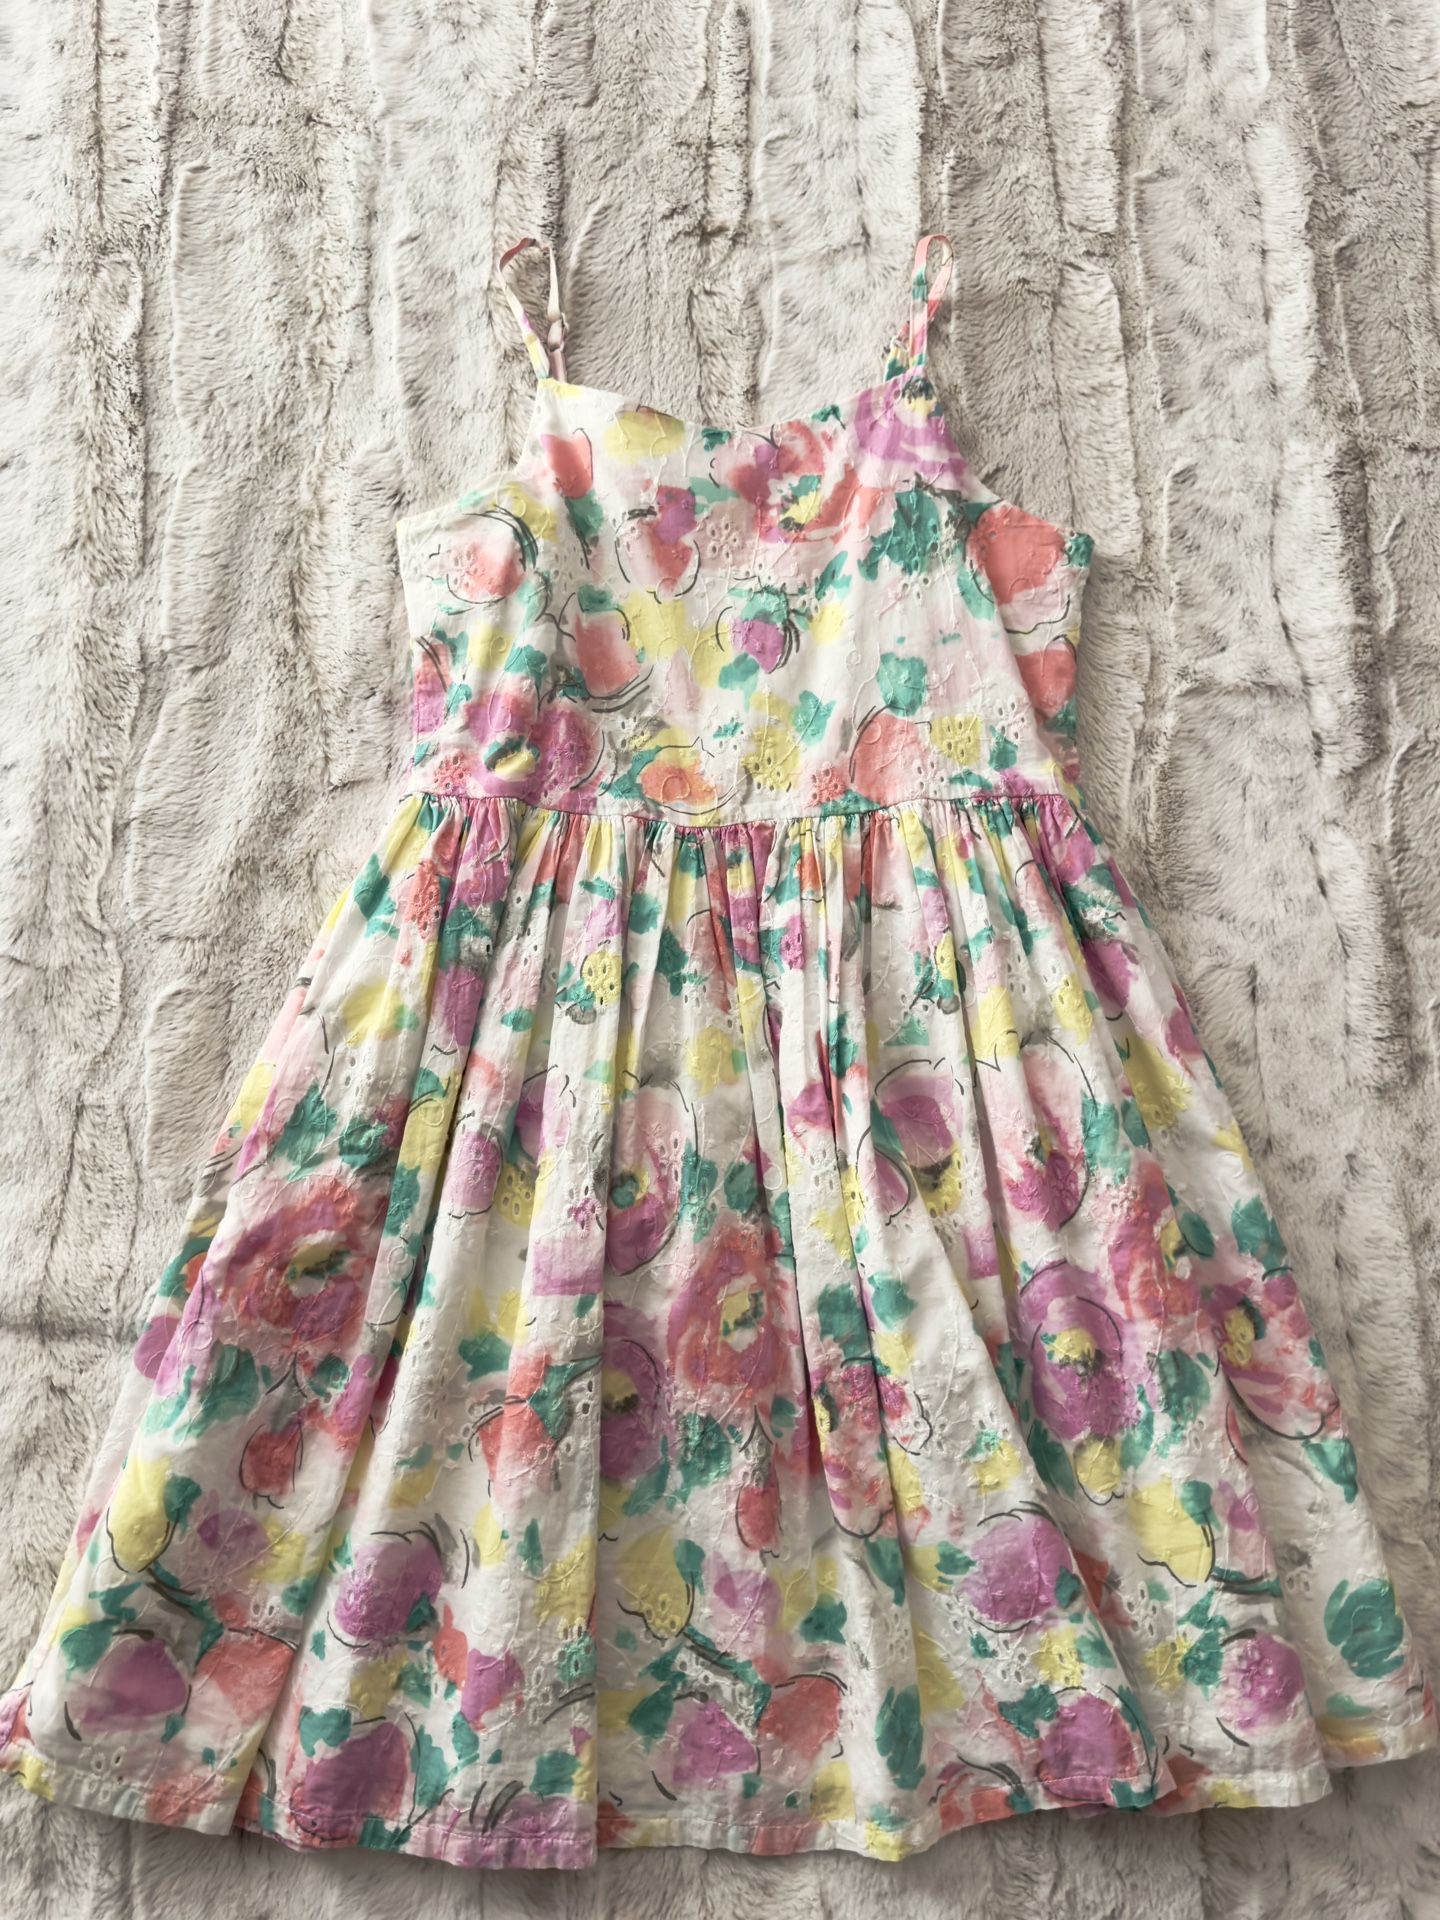 Size 10 Girls Spring Dress By Gymboree